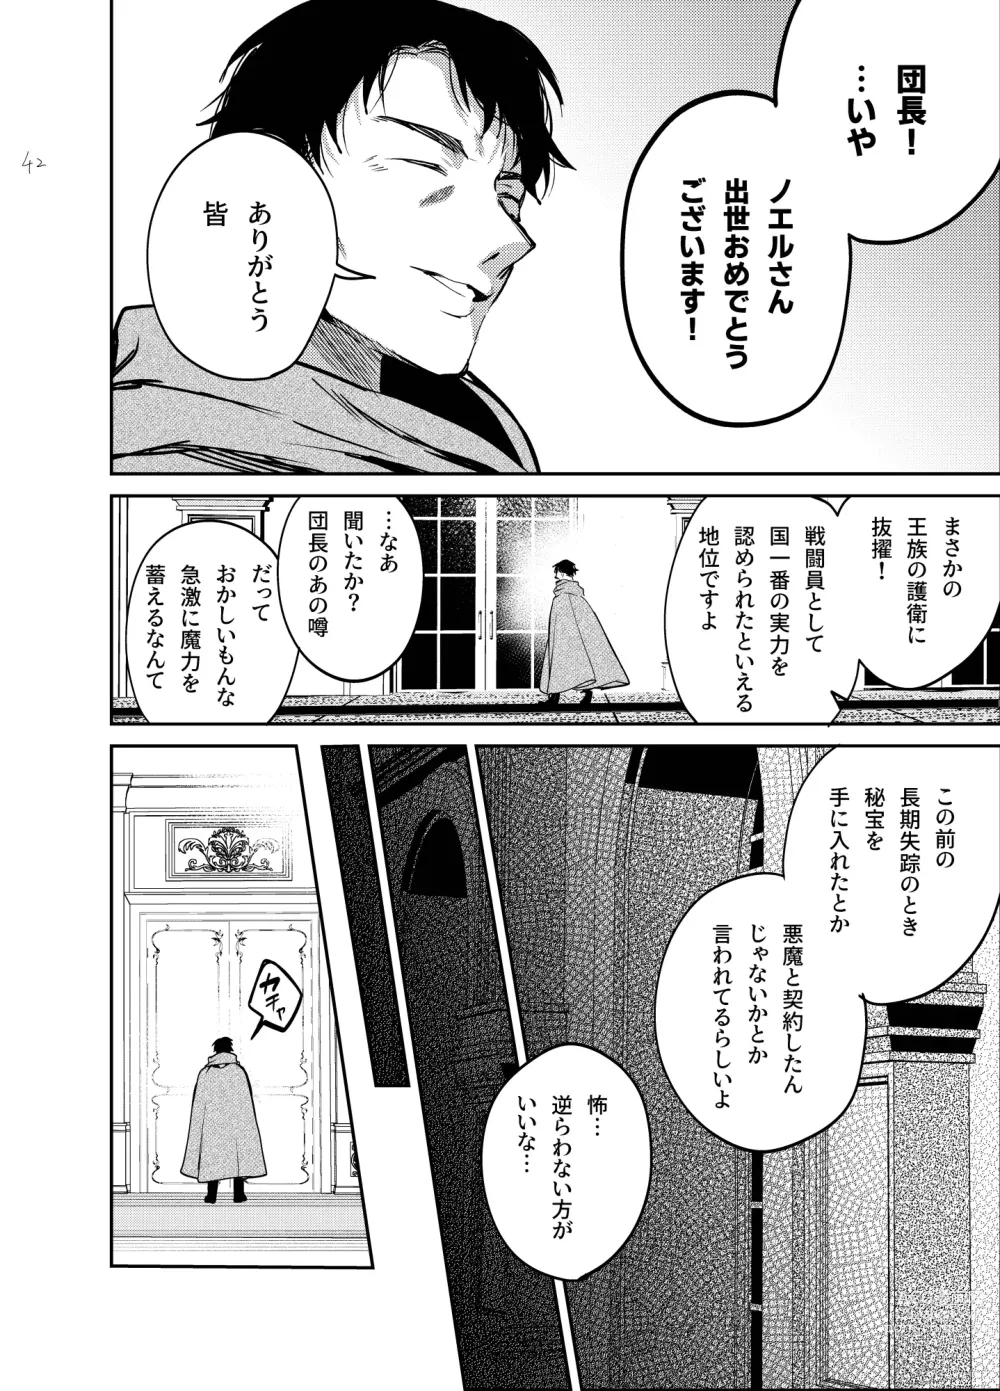 Page 42 of doujinshi Nightmare Before Christmas